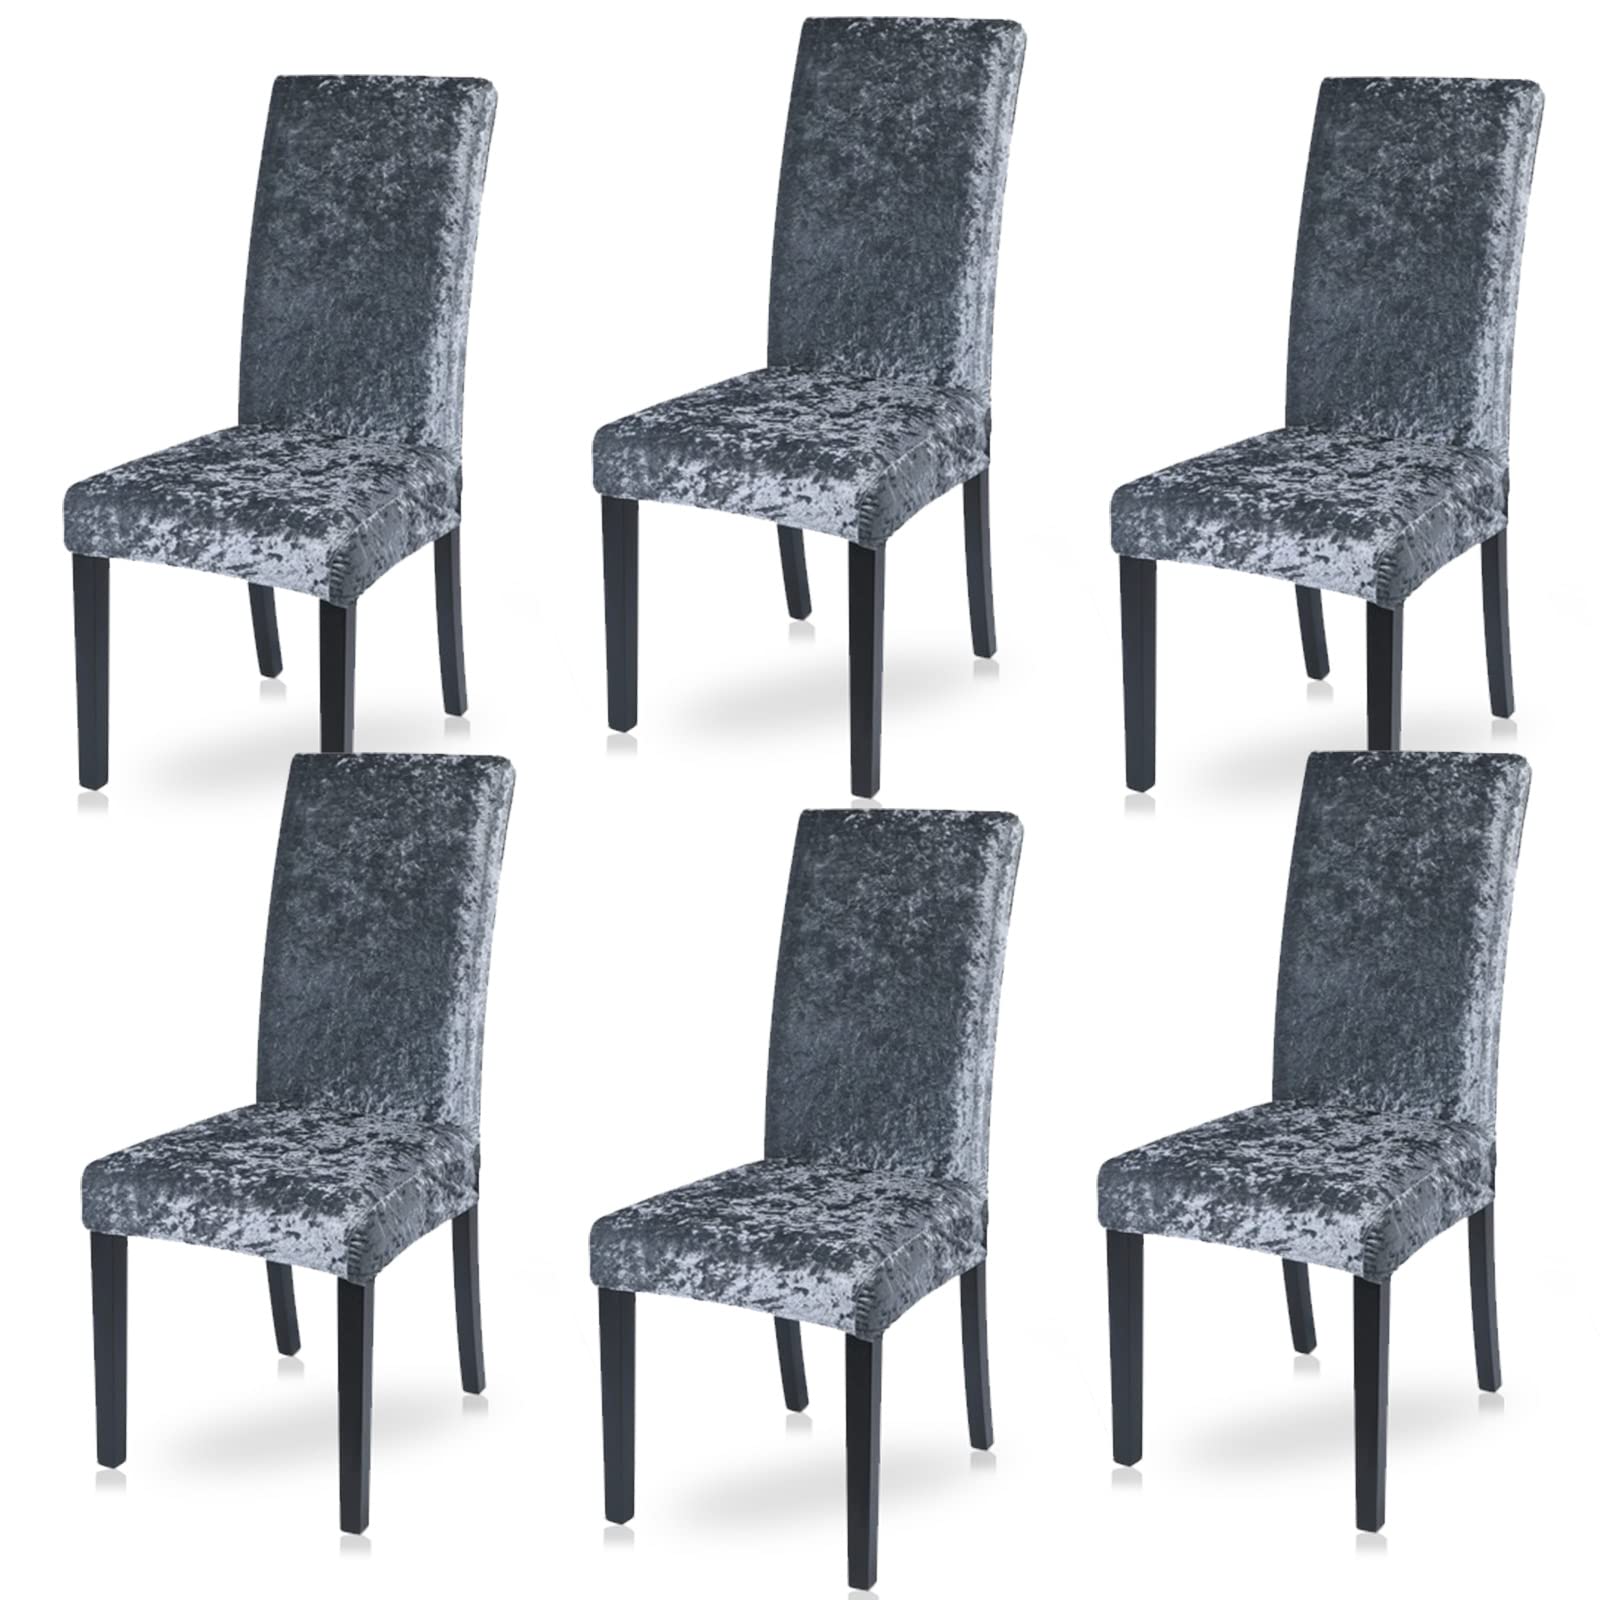 Set 6 huse pentru scaune, elastice si catifelate, Gri inchis